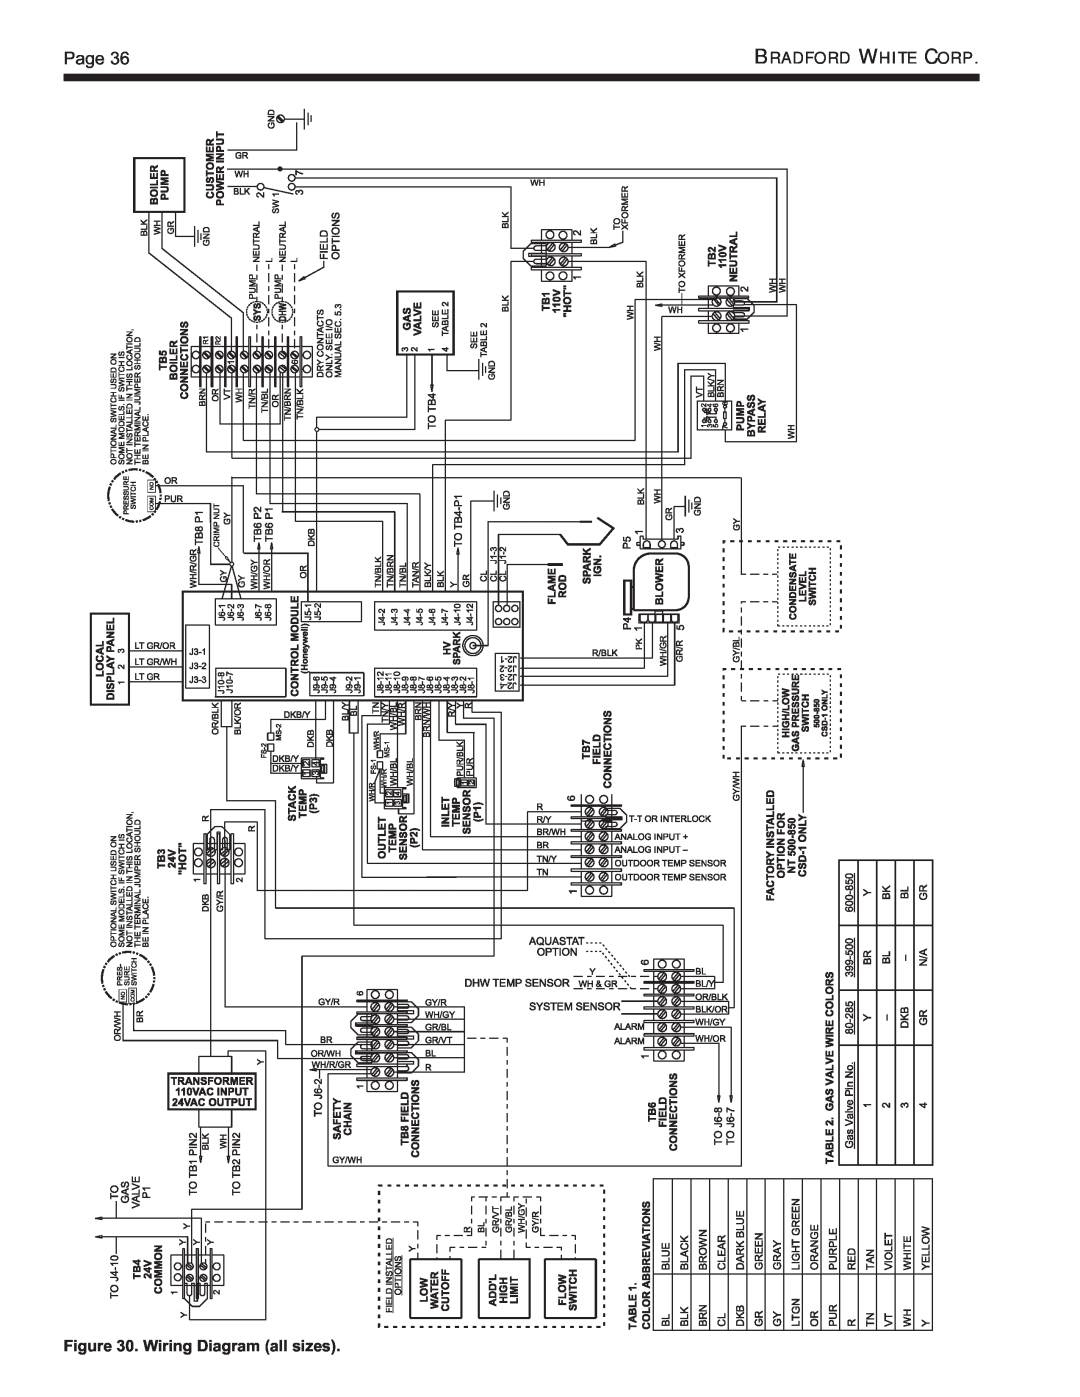 Bradford-White Corp BNTH, BNTV, Modulating Boiler warranty Page, Wiring Diagram all sizes 